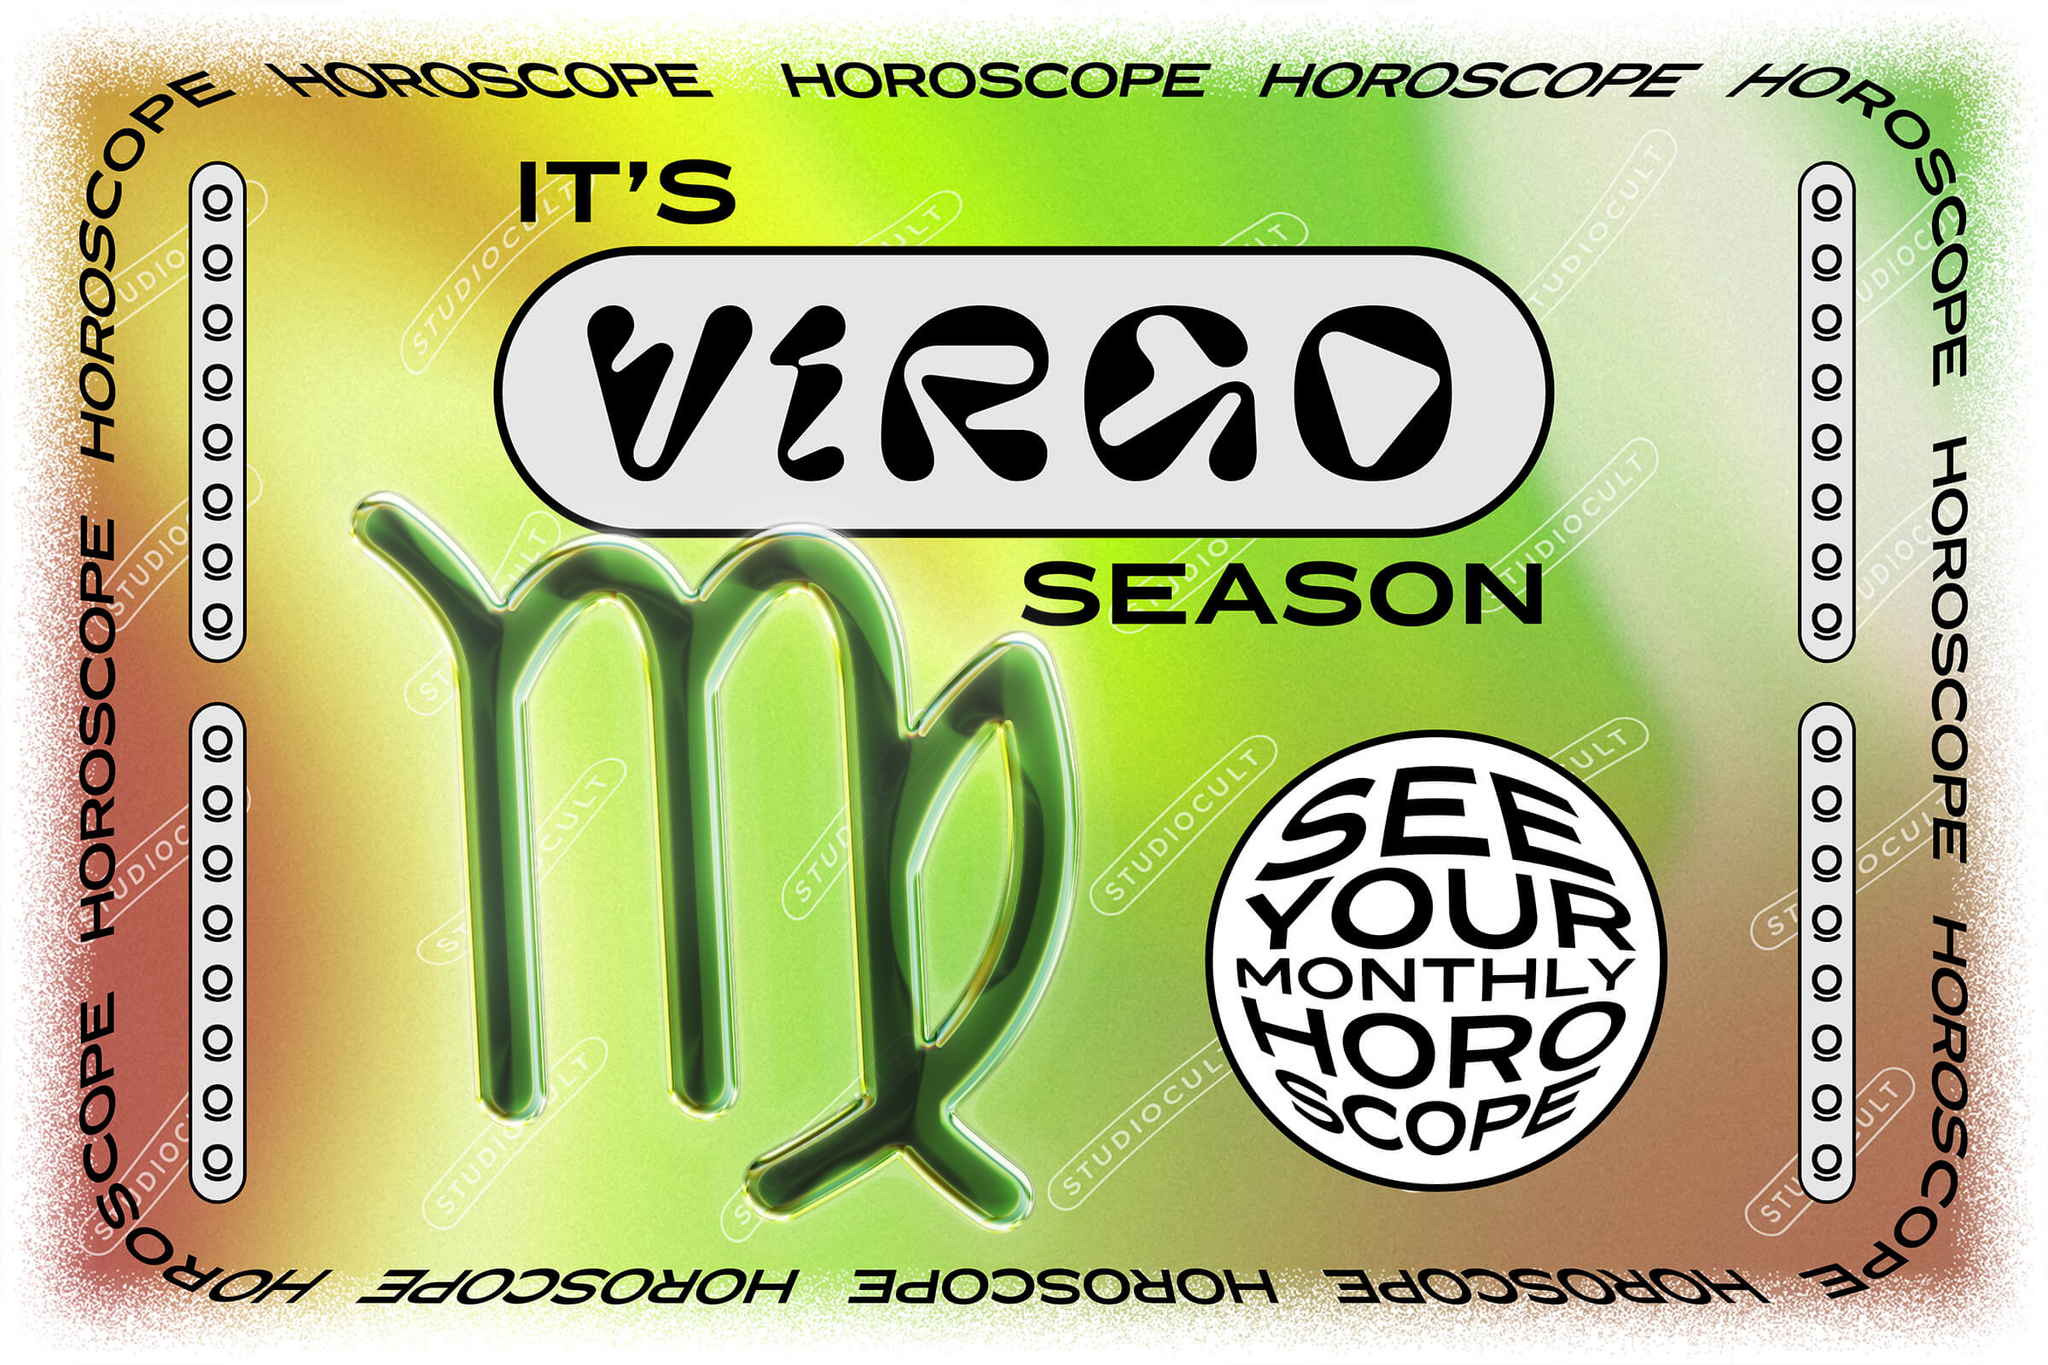 Horoscopes for Virgo Season: The Signs as Houseplants